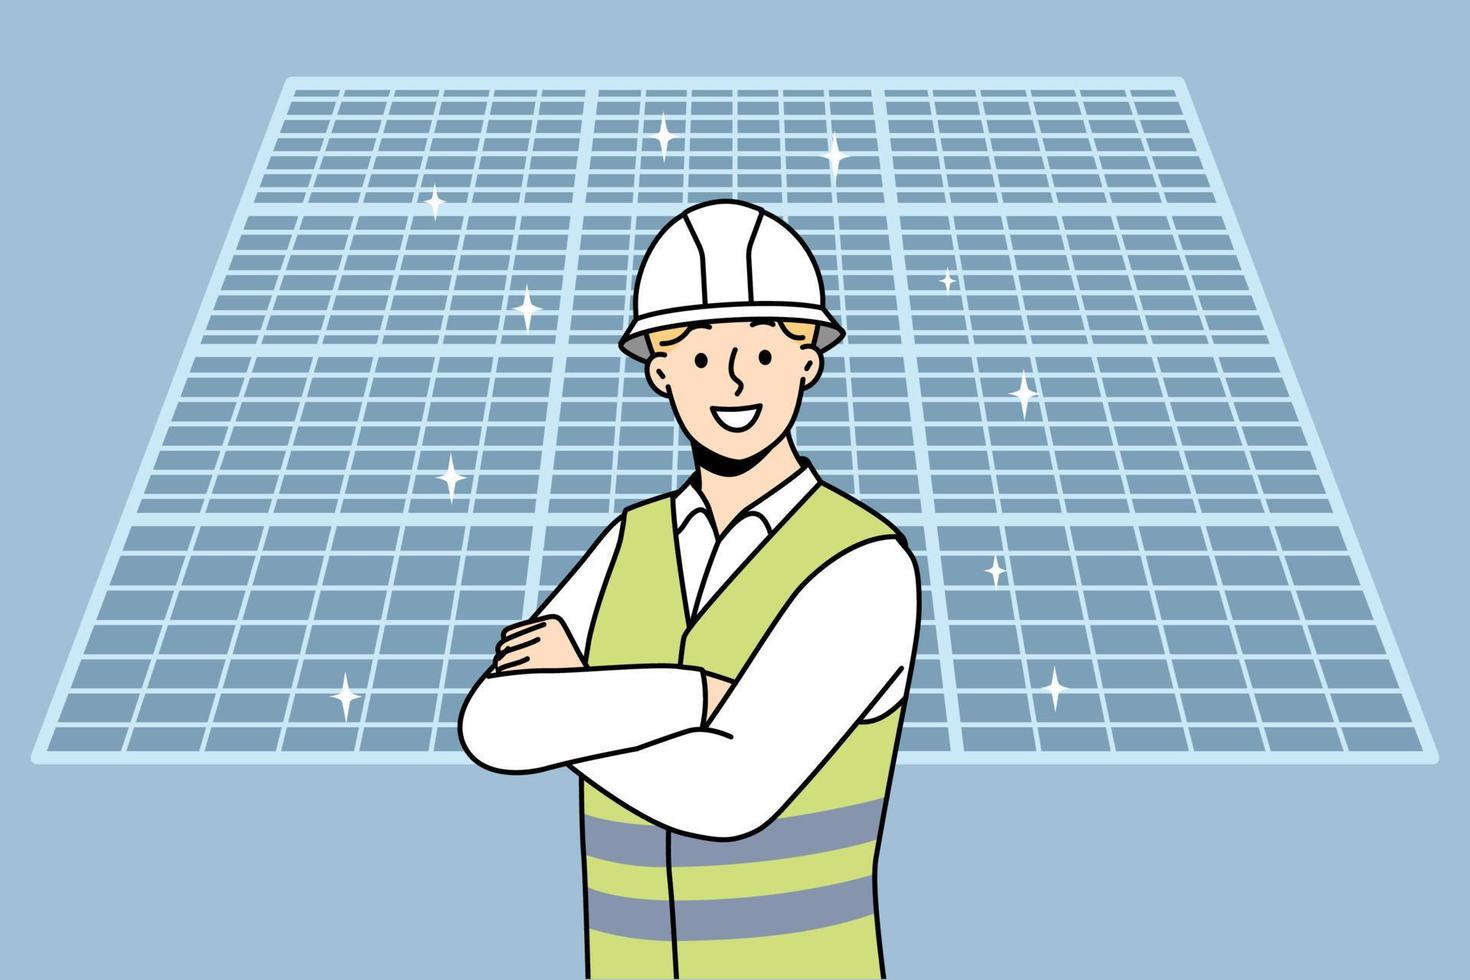 sonriente masculino ingeniero en uniforme y casco estar cerca solar paneles contento hombre recomendar moderno fotovoltaica pilas vector ilustración.